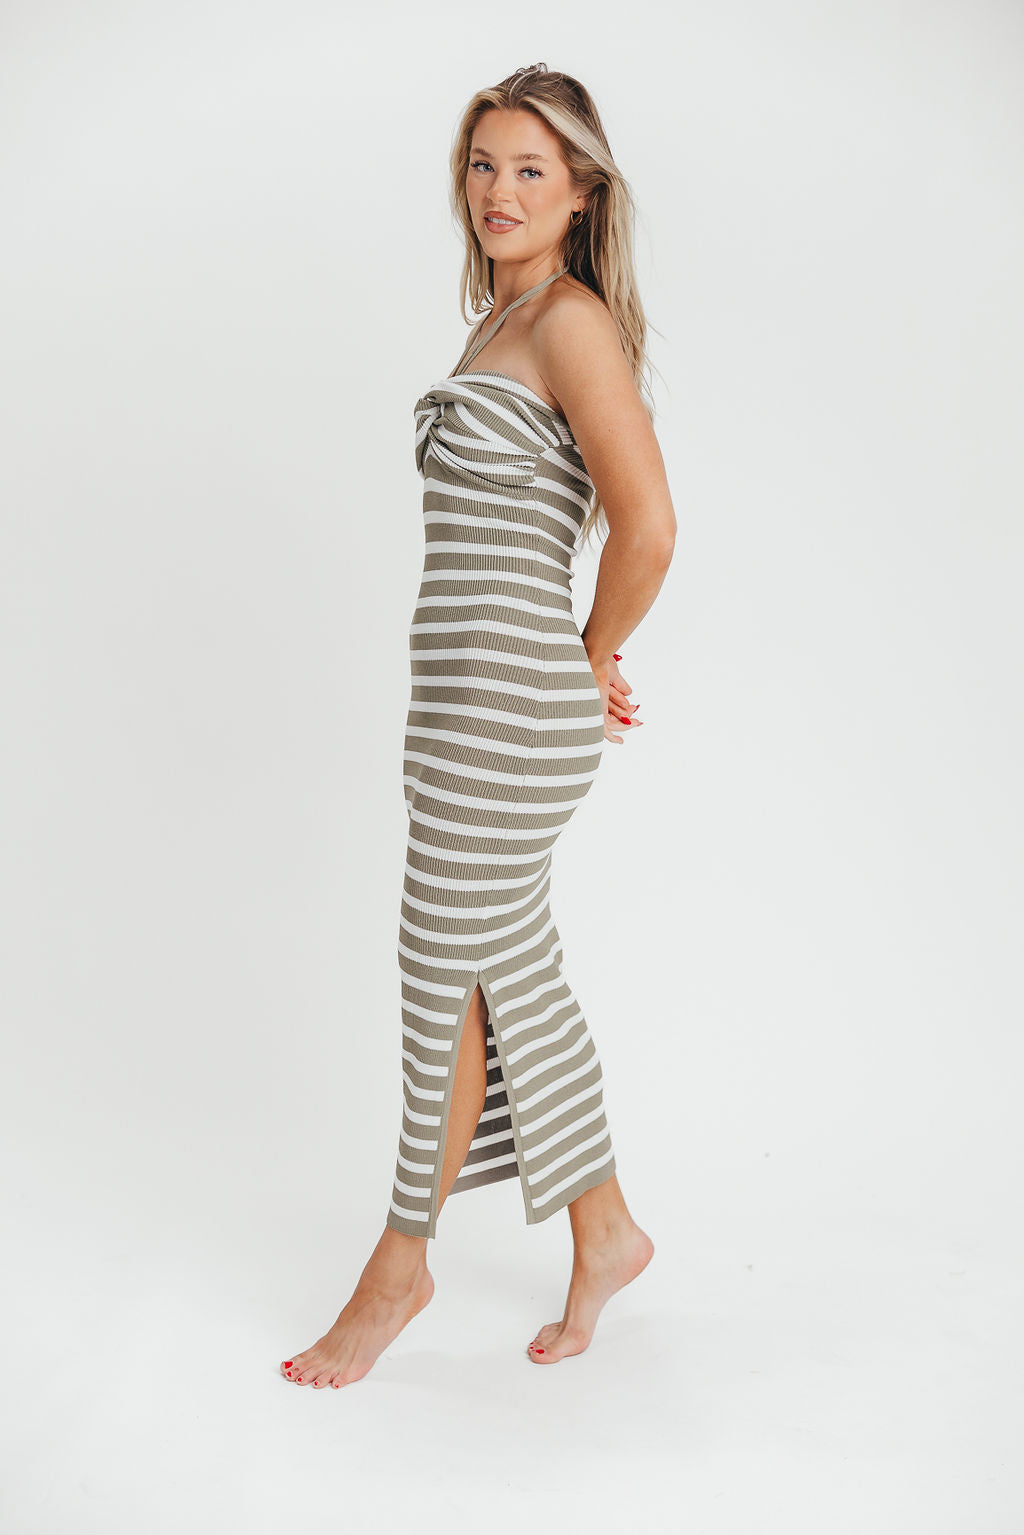 Maeve Striped Halter Maxi Dress in White/Sage